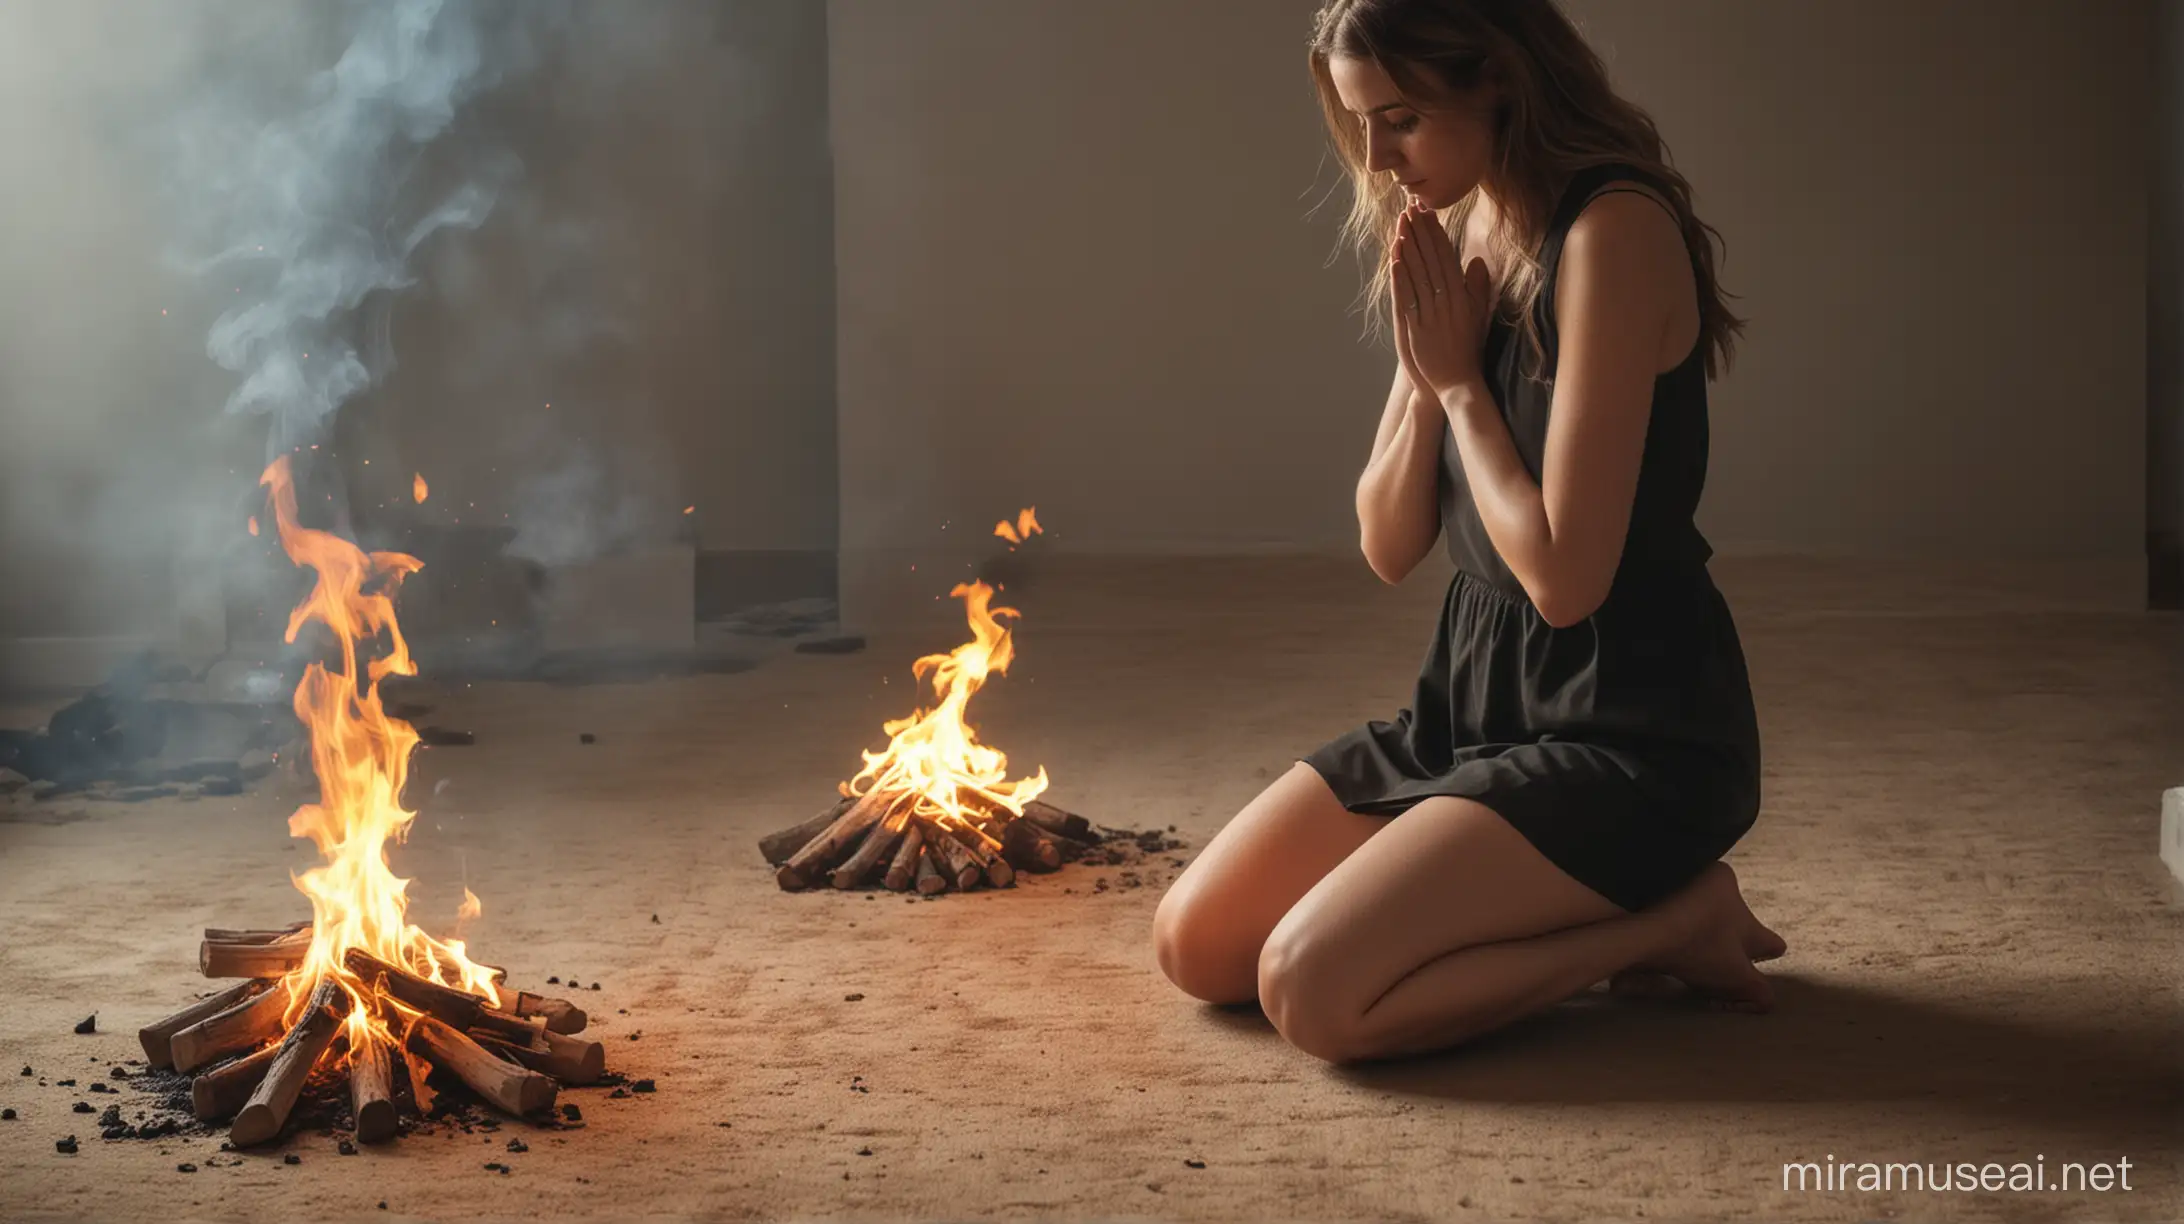 woman praying in knees and burning
